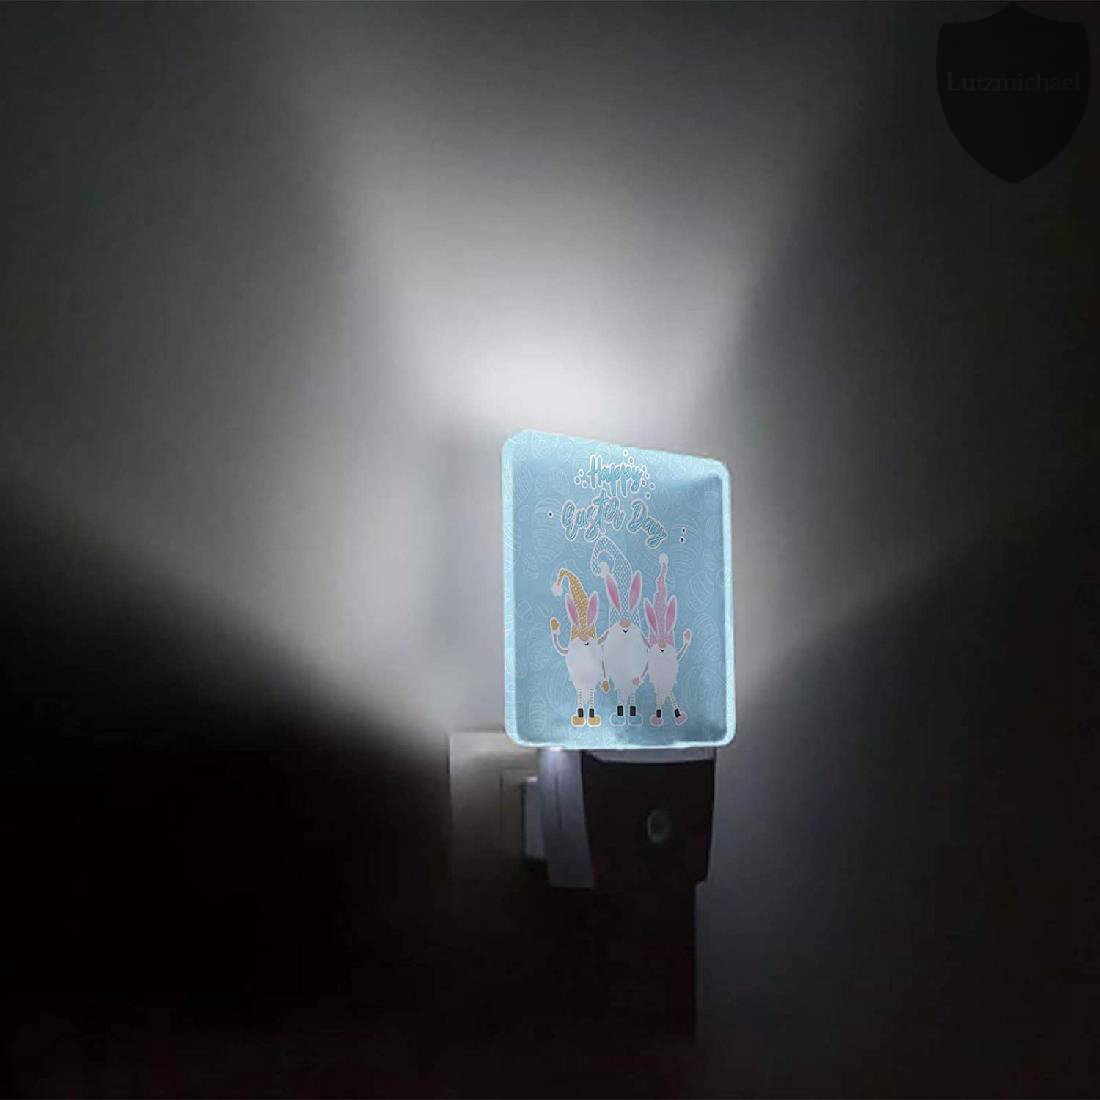 LED Night Light Wall Plug In Dusk to Dawn Automatic Sensor Bedside